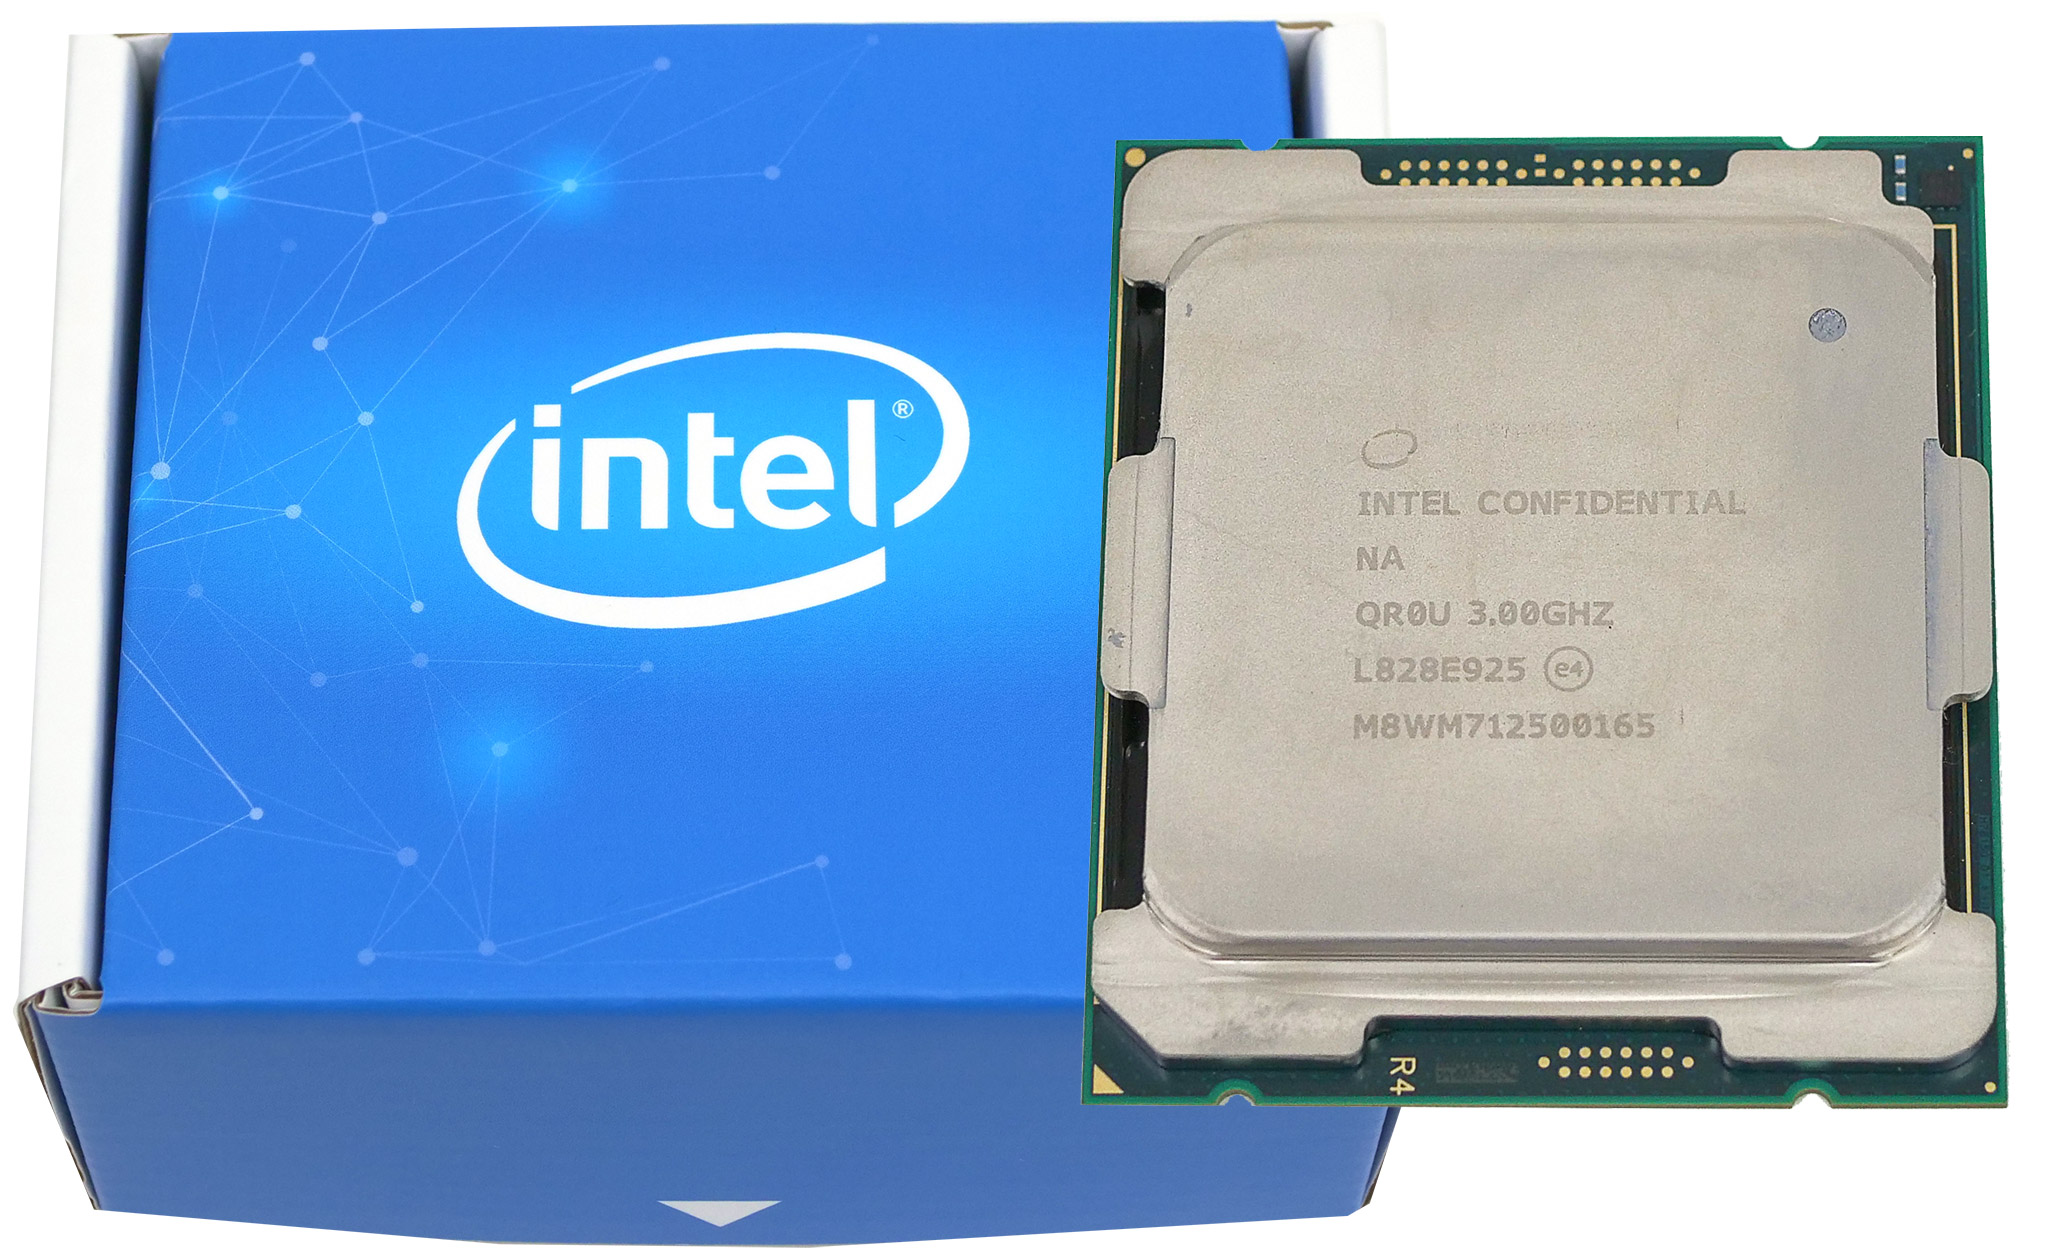 Intel Core i9-9980XE Extreme Edition Review – It Hertz! | KitGuru